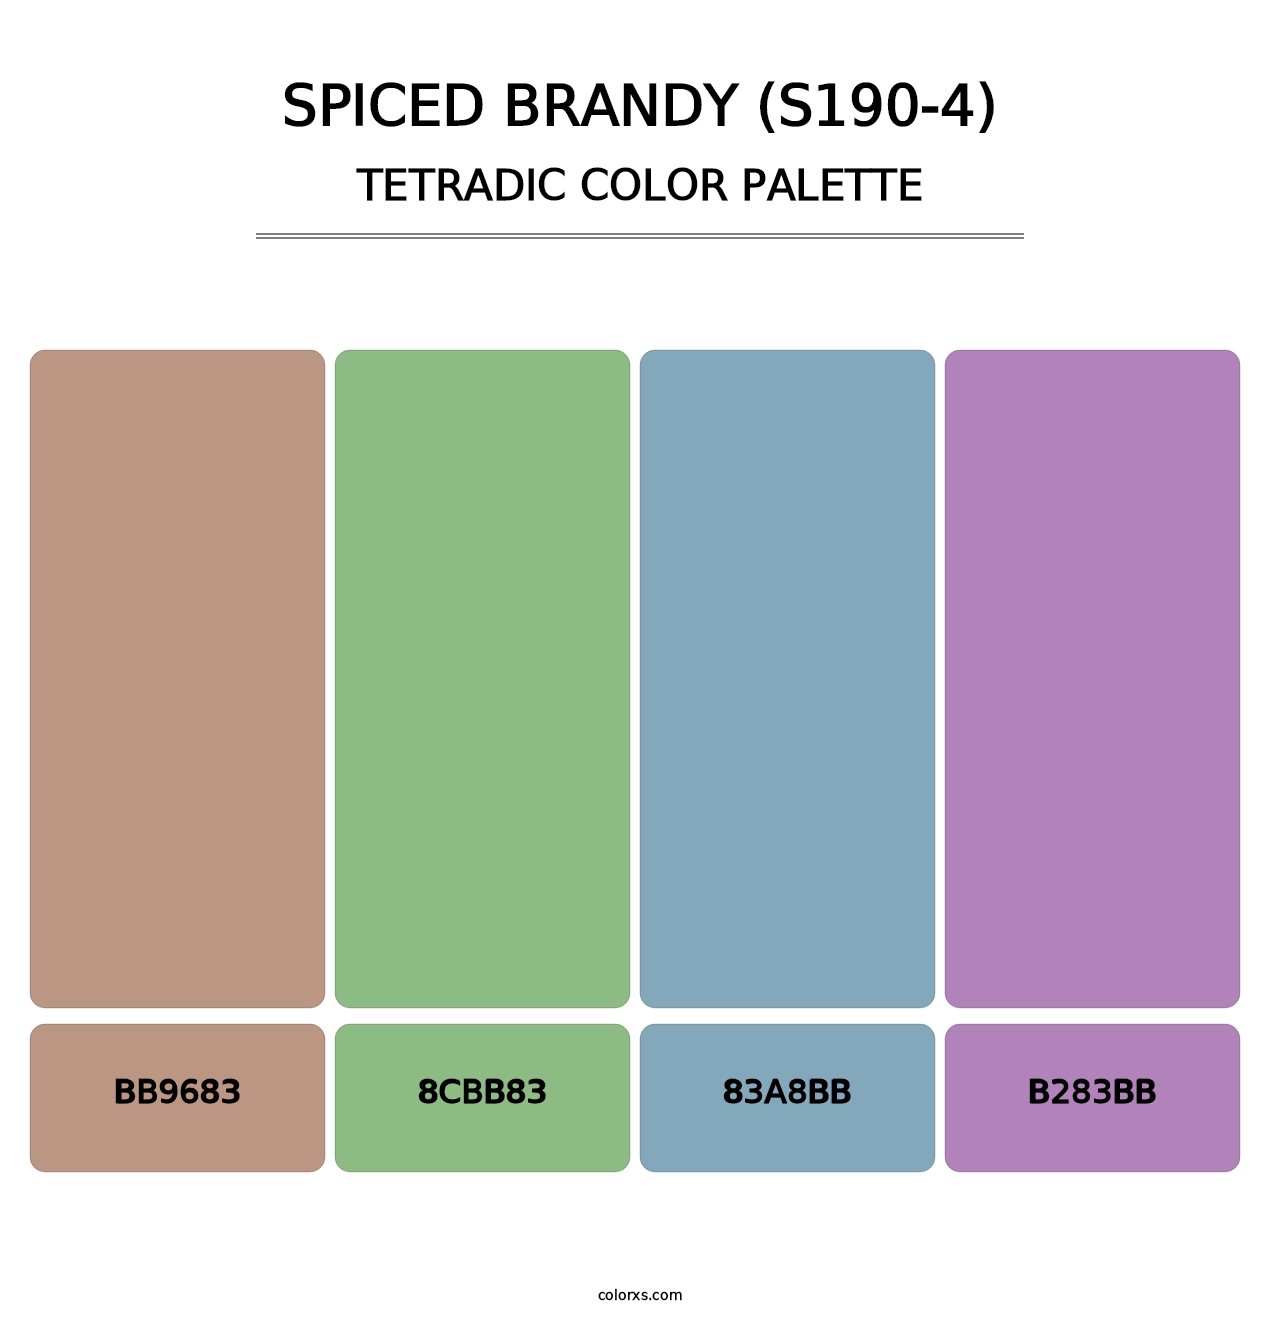 Spiced Brandy (S190-4) - Tetradic Color Palette